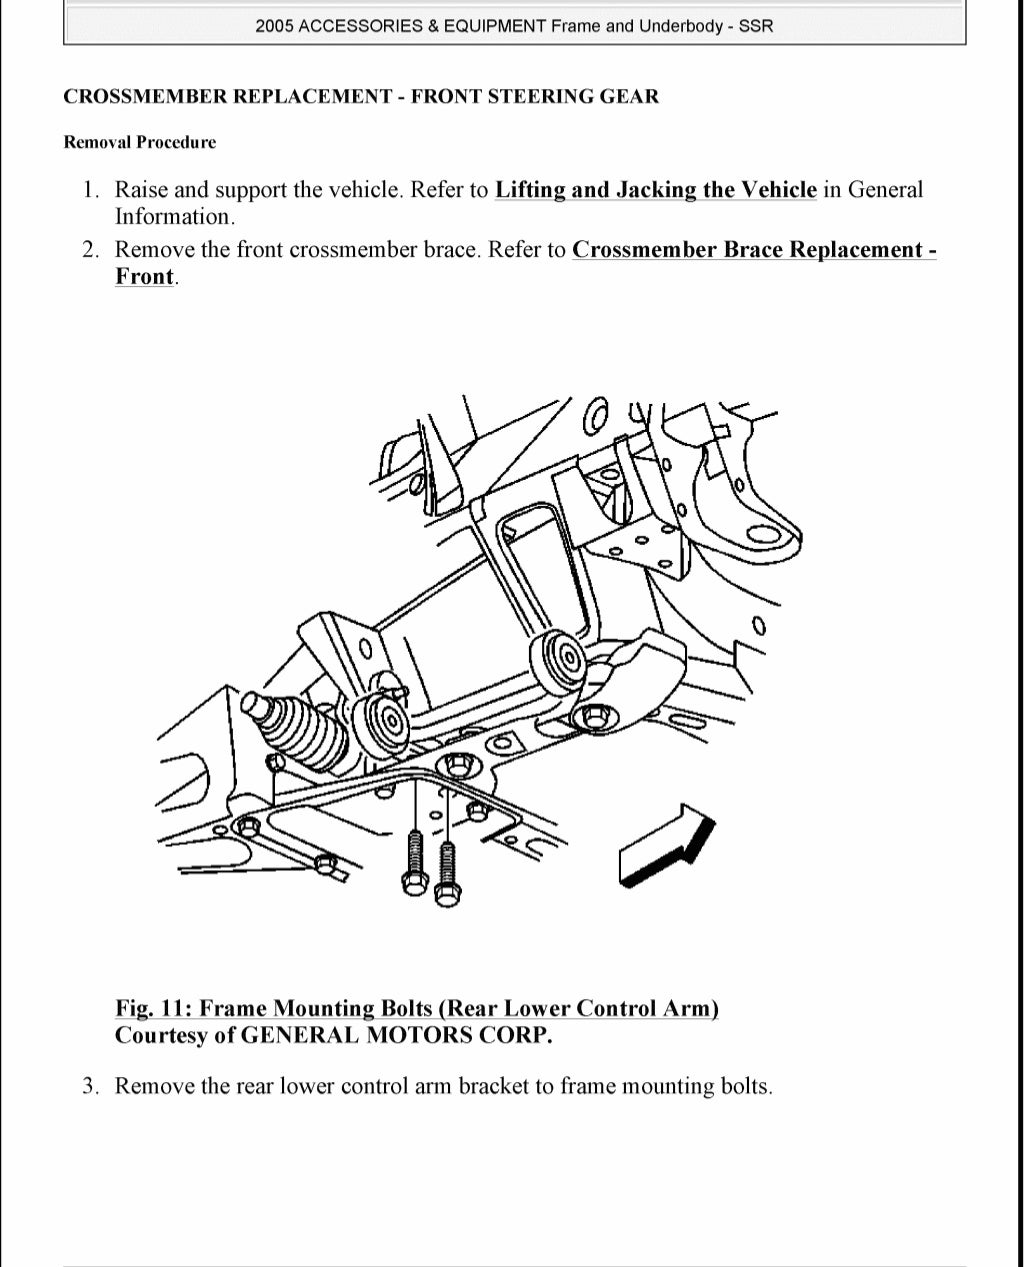 2006 Chevrolet Ssr Service Repair Manual